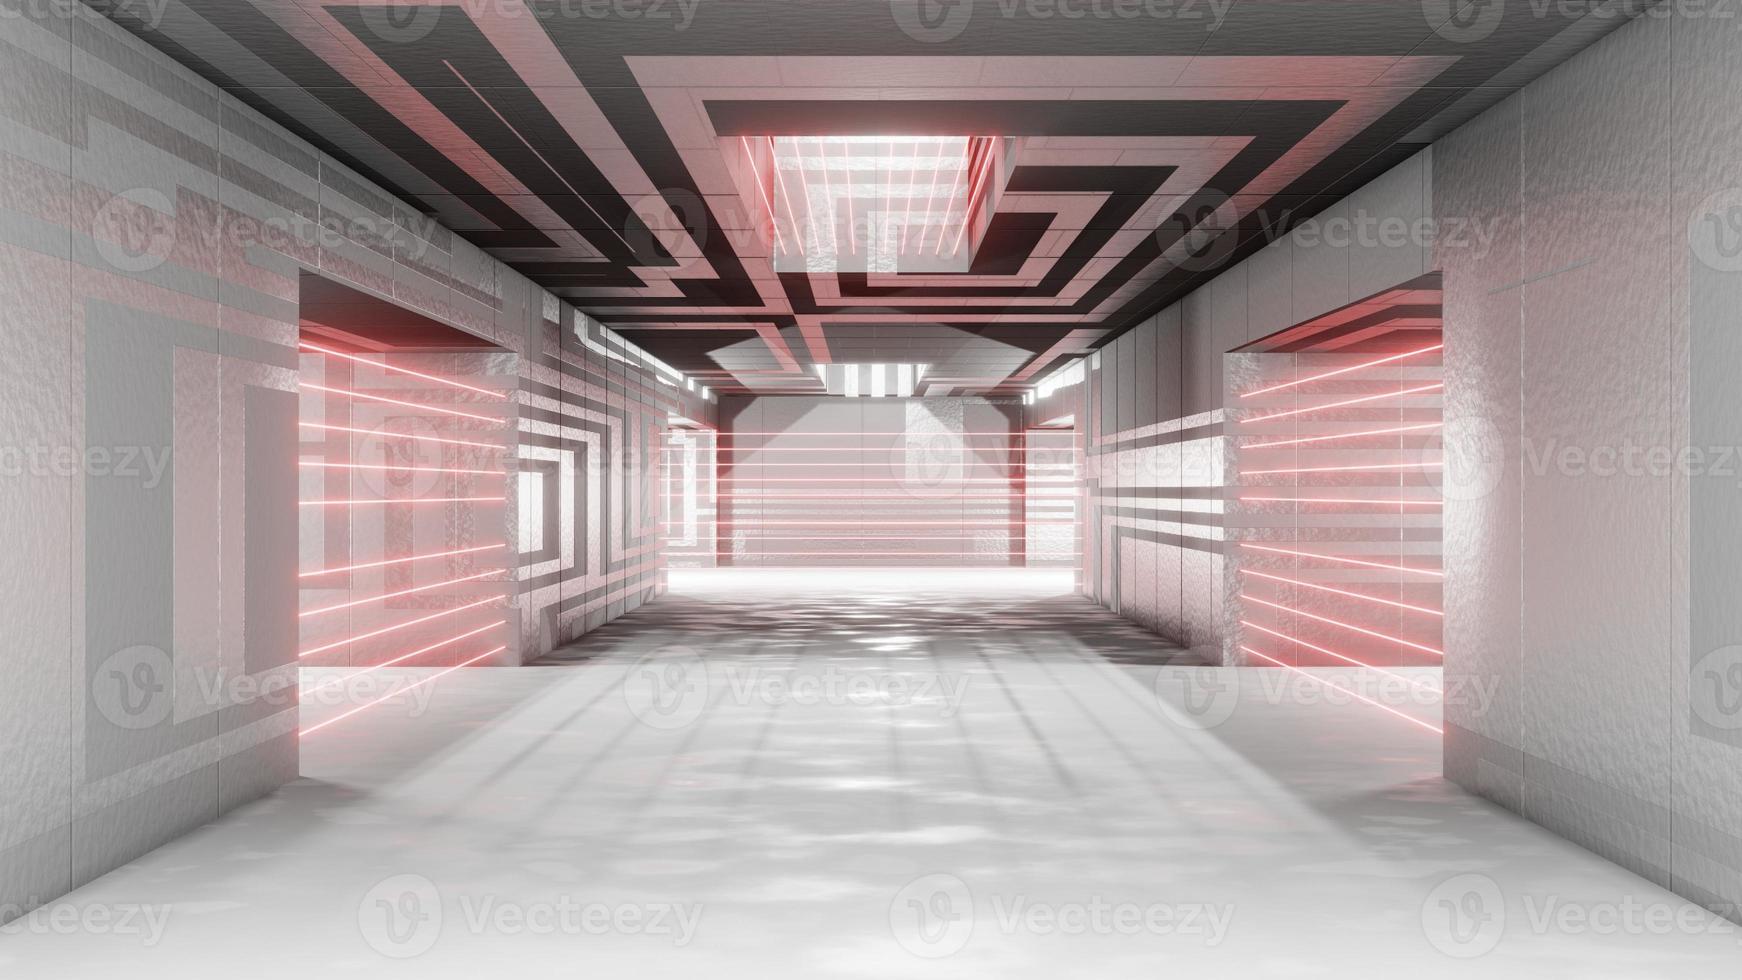 Sci fi interior futuristic room laser alarm protection security prison corridor garage alien space ship pipes communication glowing neon light fog 3D rendering photo